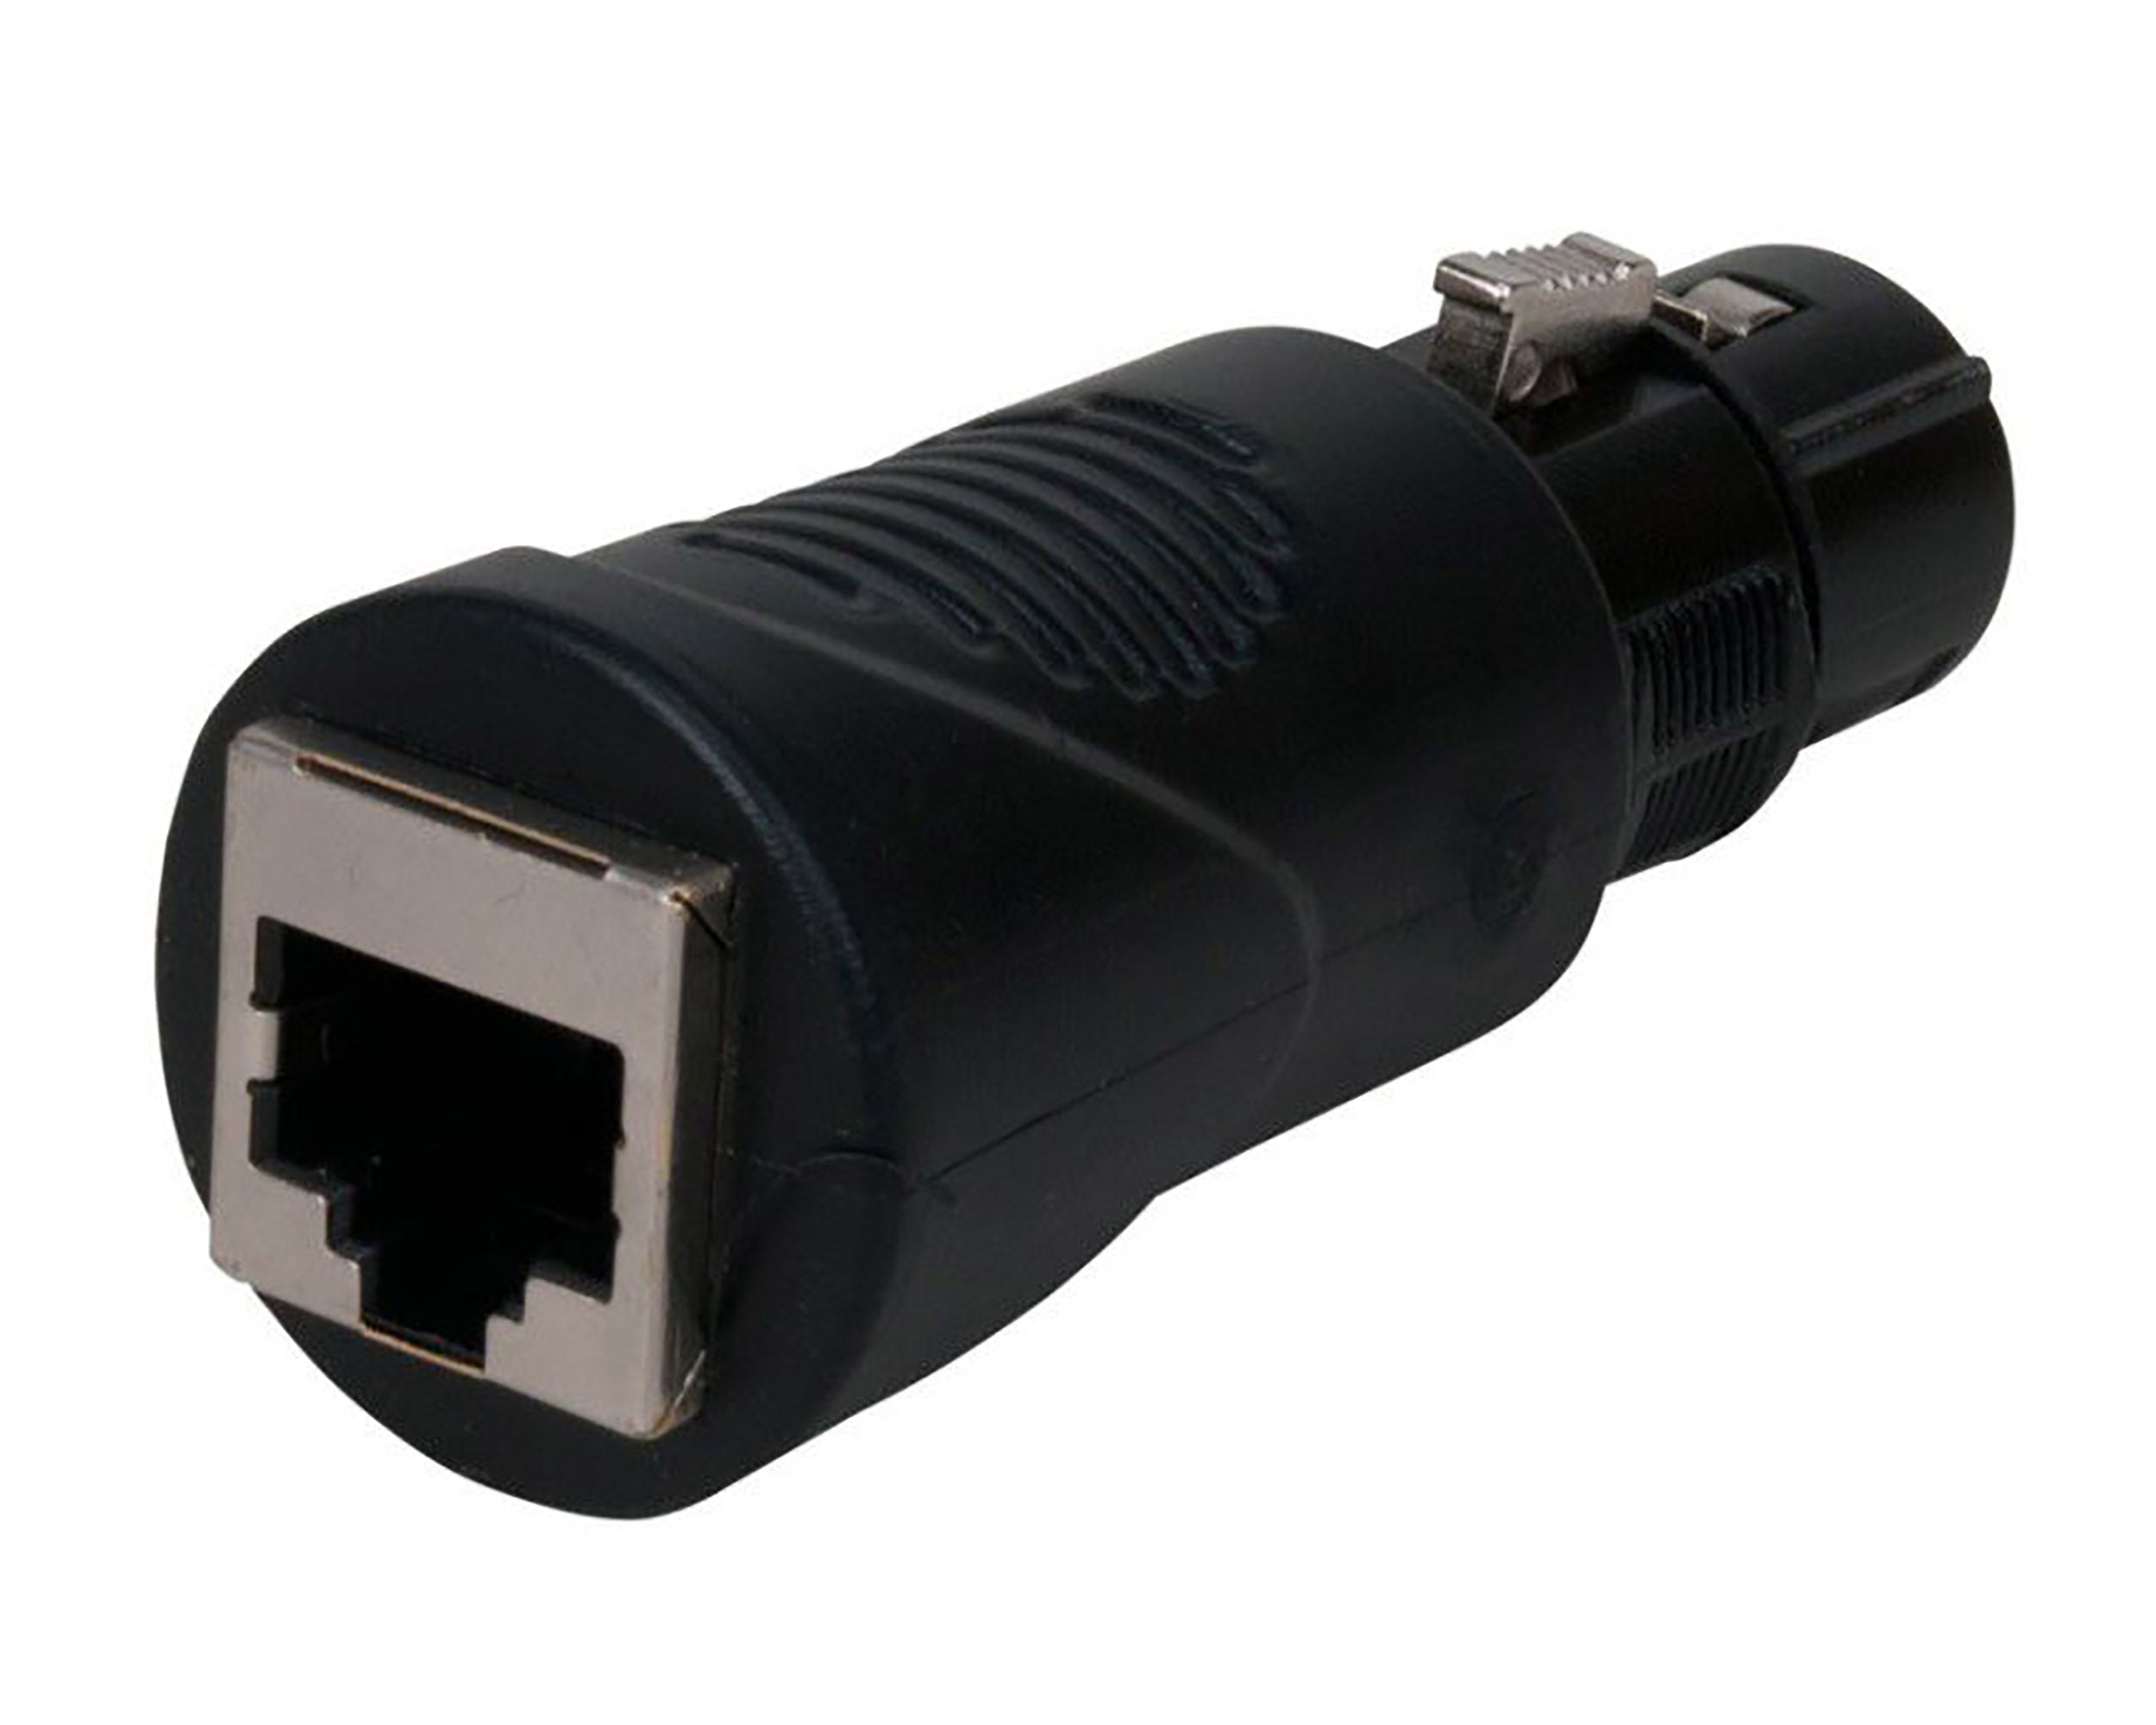 Accu-Cable ACRJ453PFM, Pro Grade RJ45 to 3pin XLR, DMX Adapter by Accu Cable